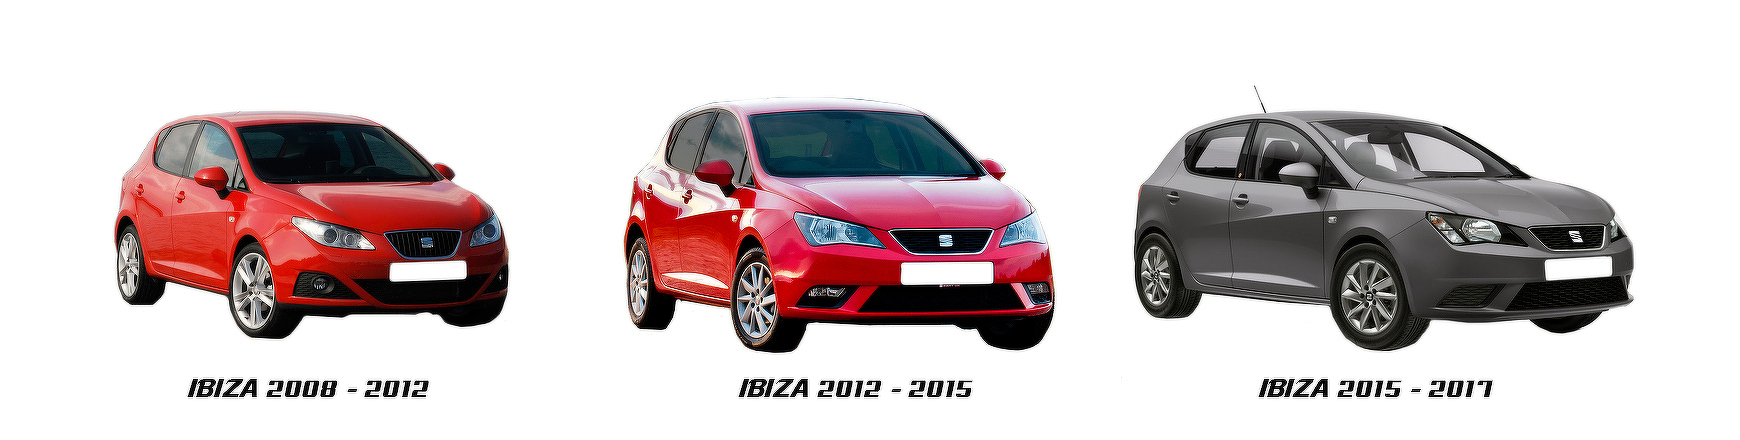 seat ibiza 2012 2013 2014 2015 venta recambios online mecanica